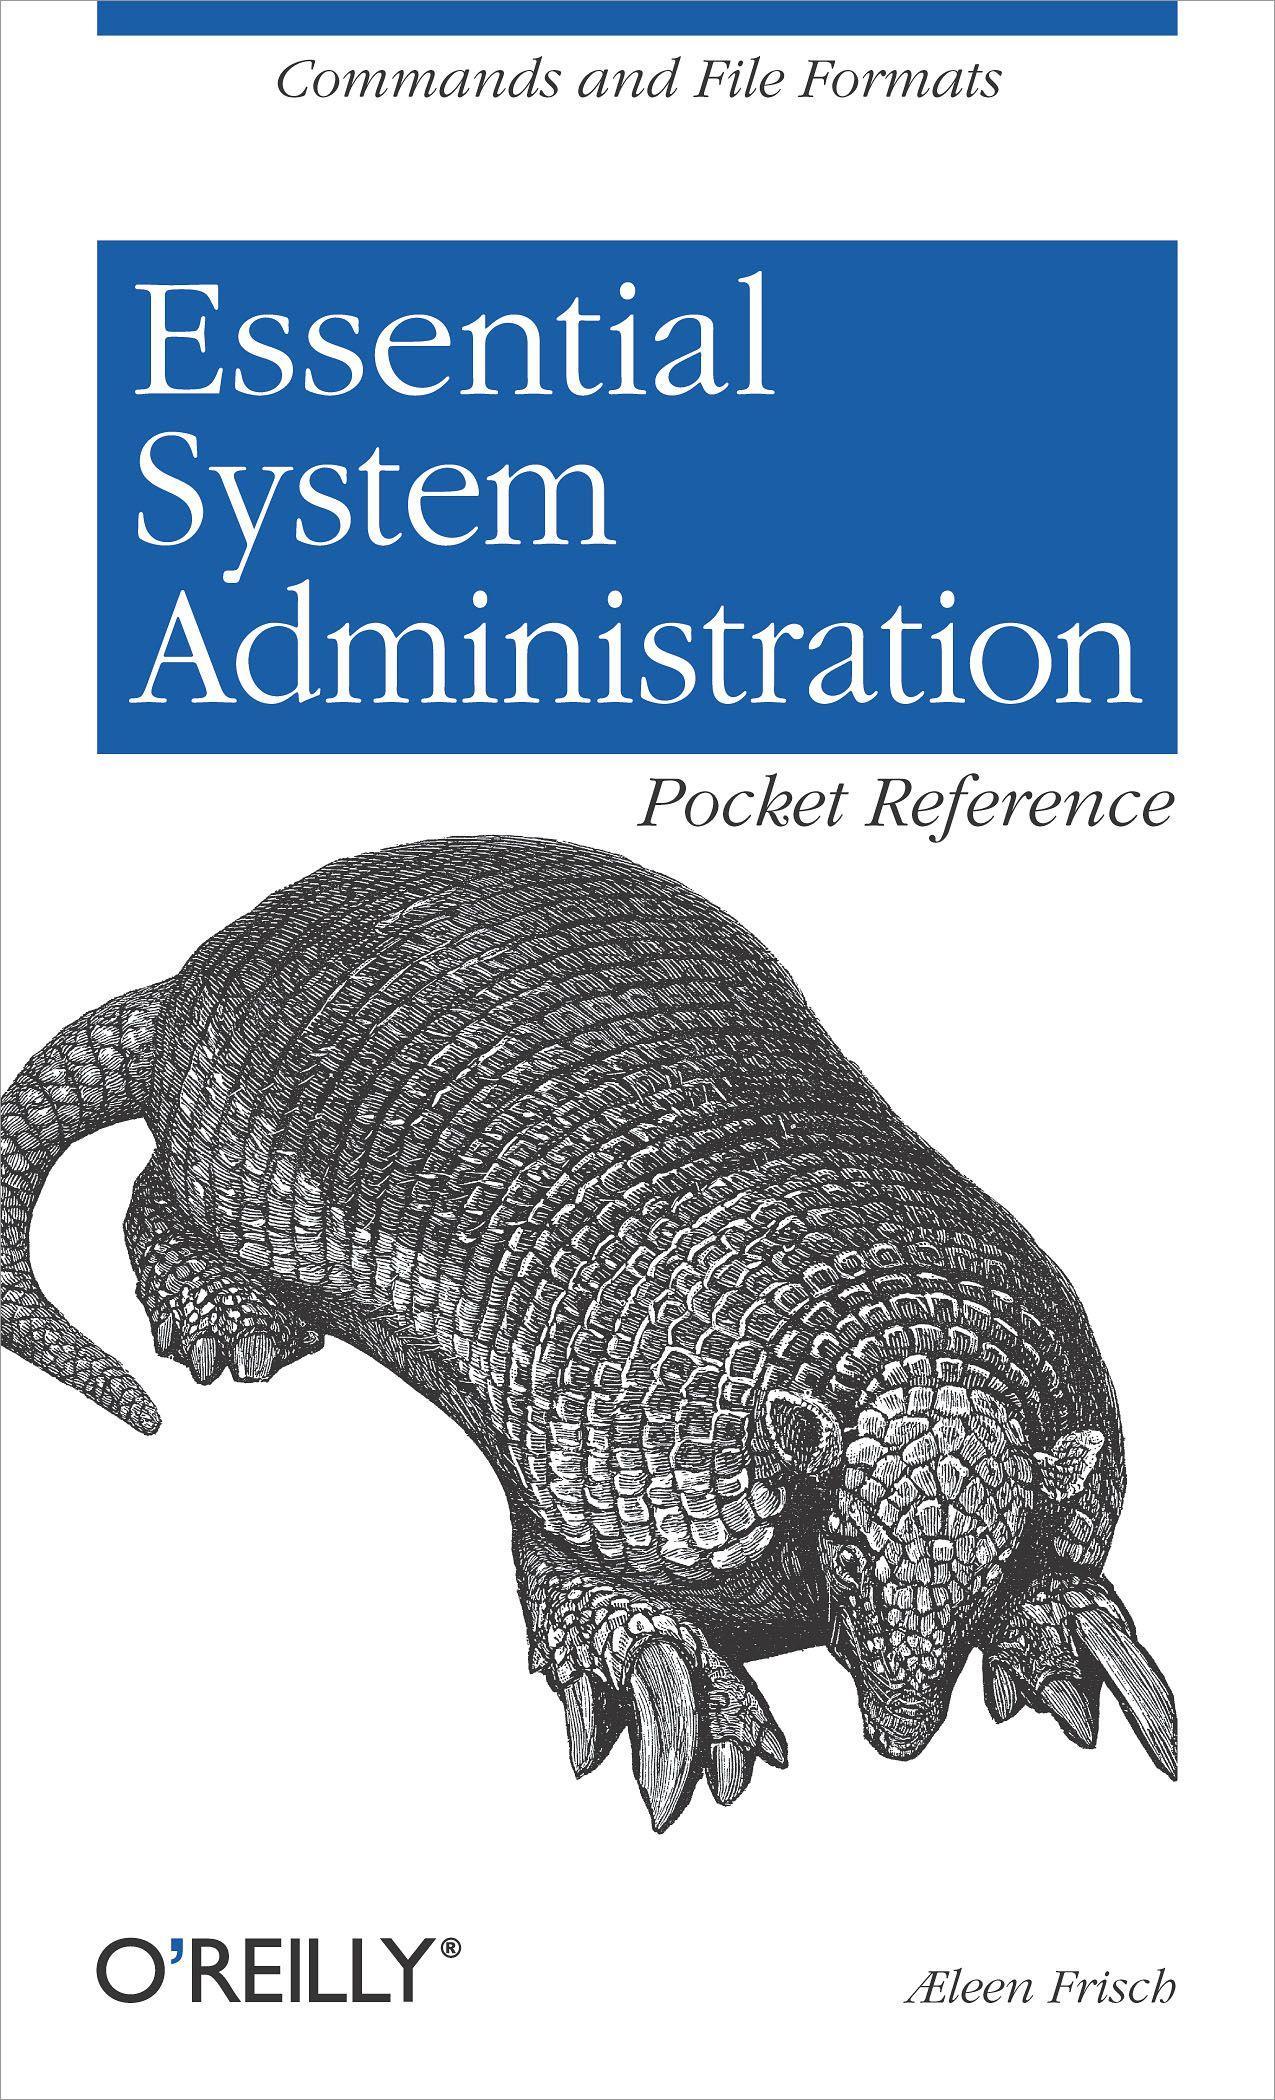 Essential System Administration Pocket Reference: Commands and File Formats - Frisch, Æleen